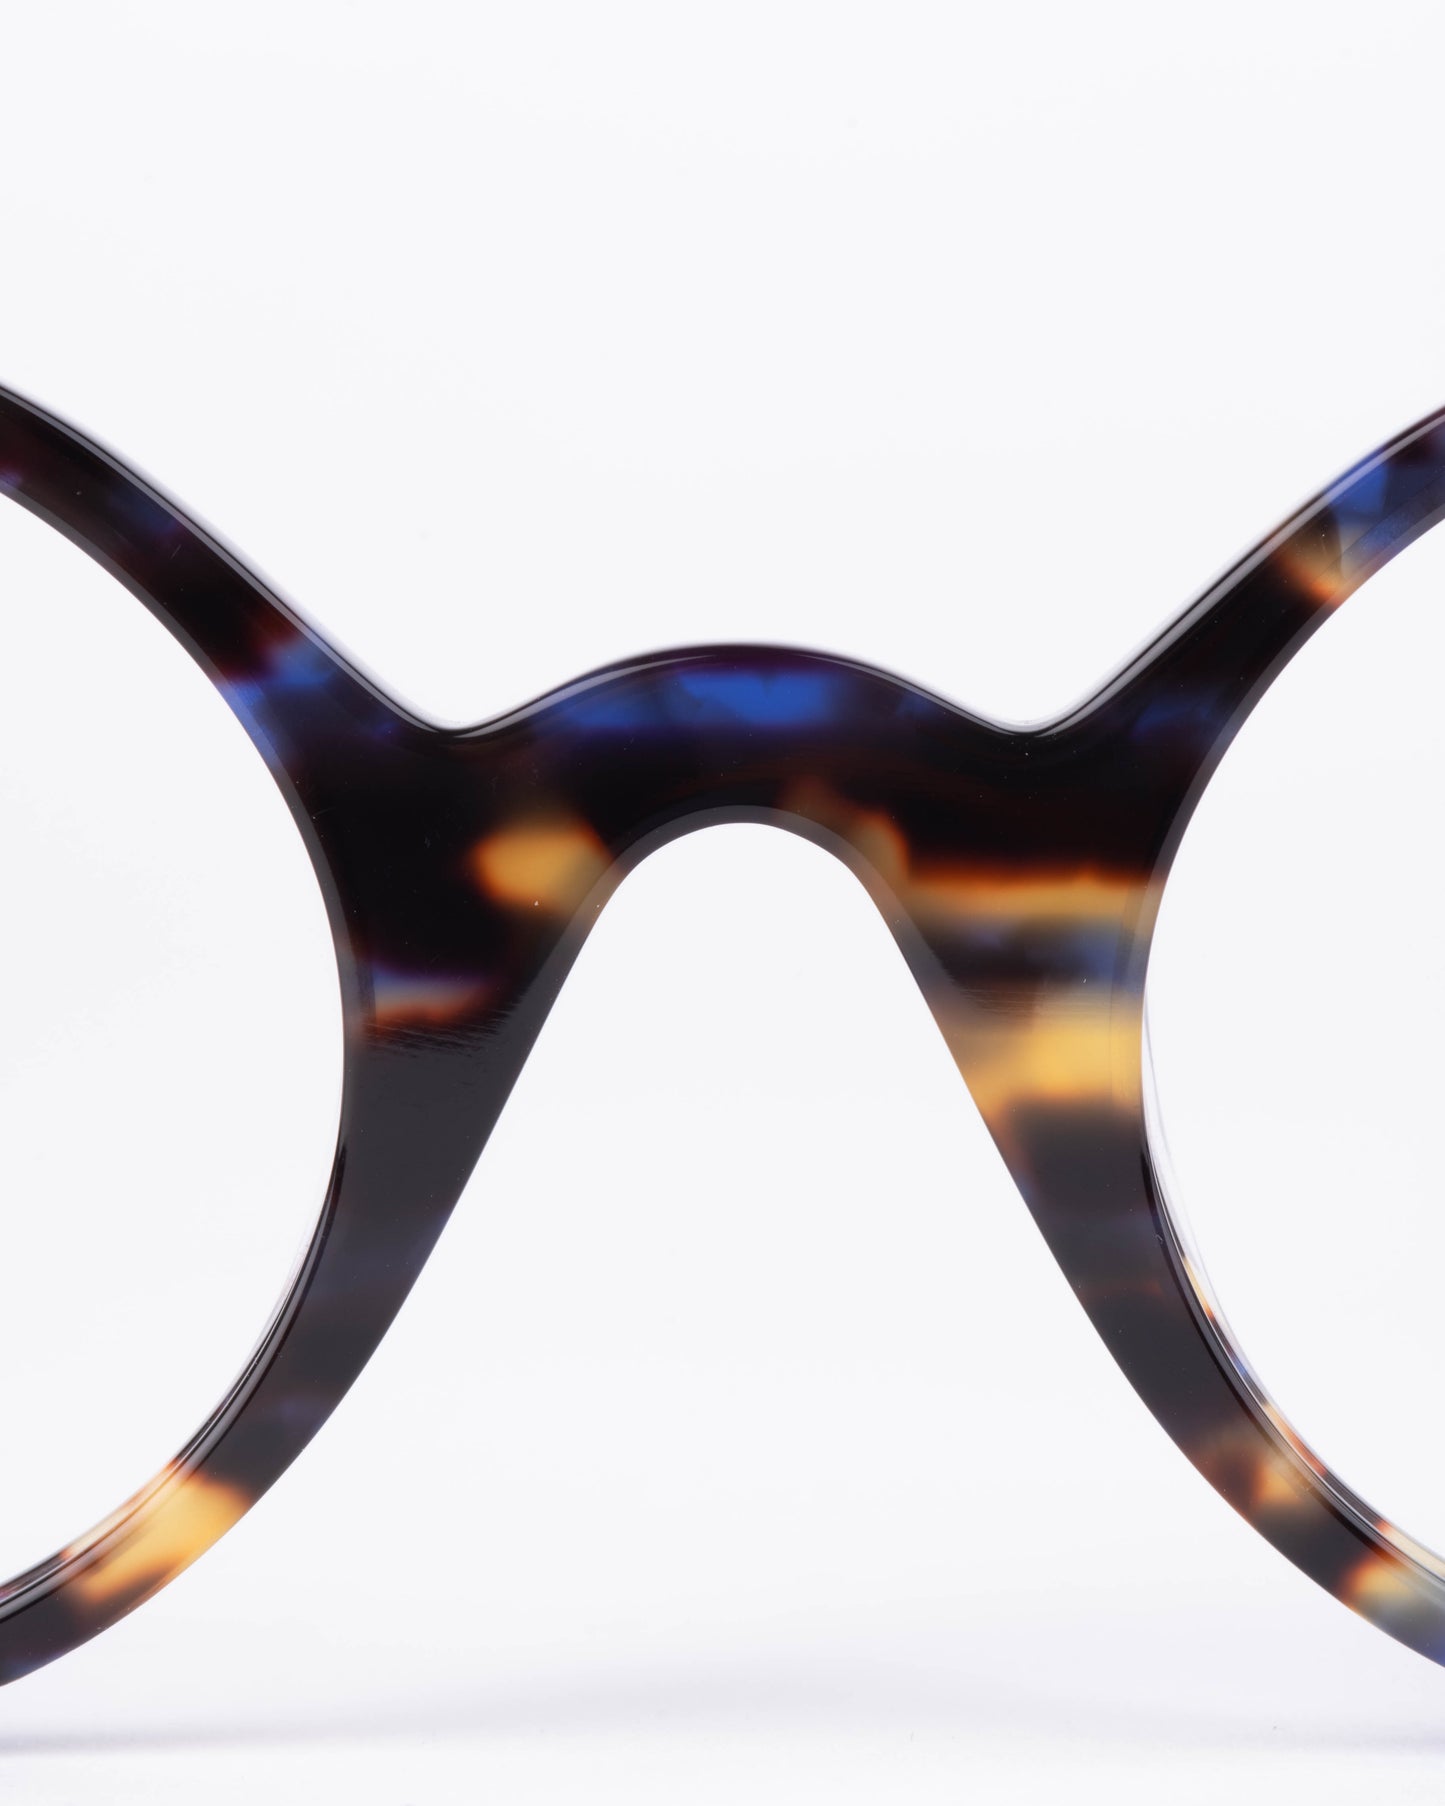 Theo - Aartappel - 15 | glasses bar